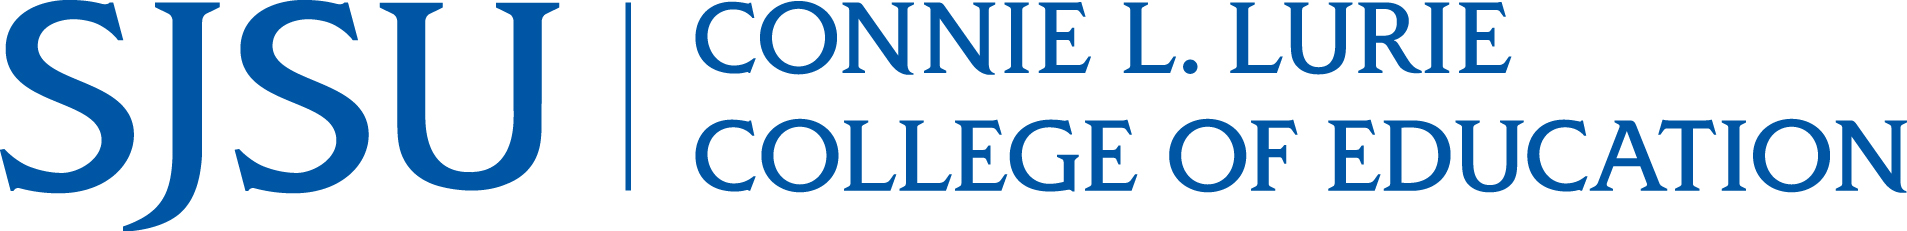 SJSU Connie L. Lurie College of Education